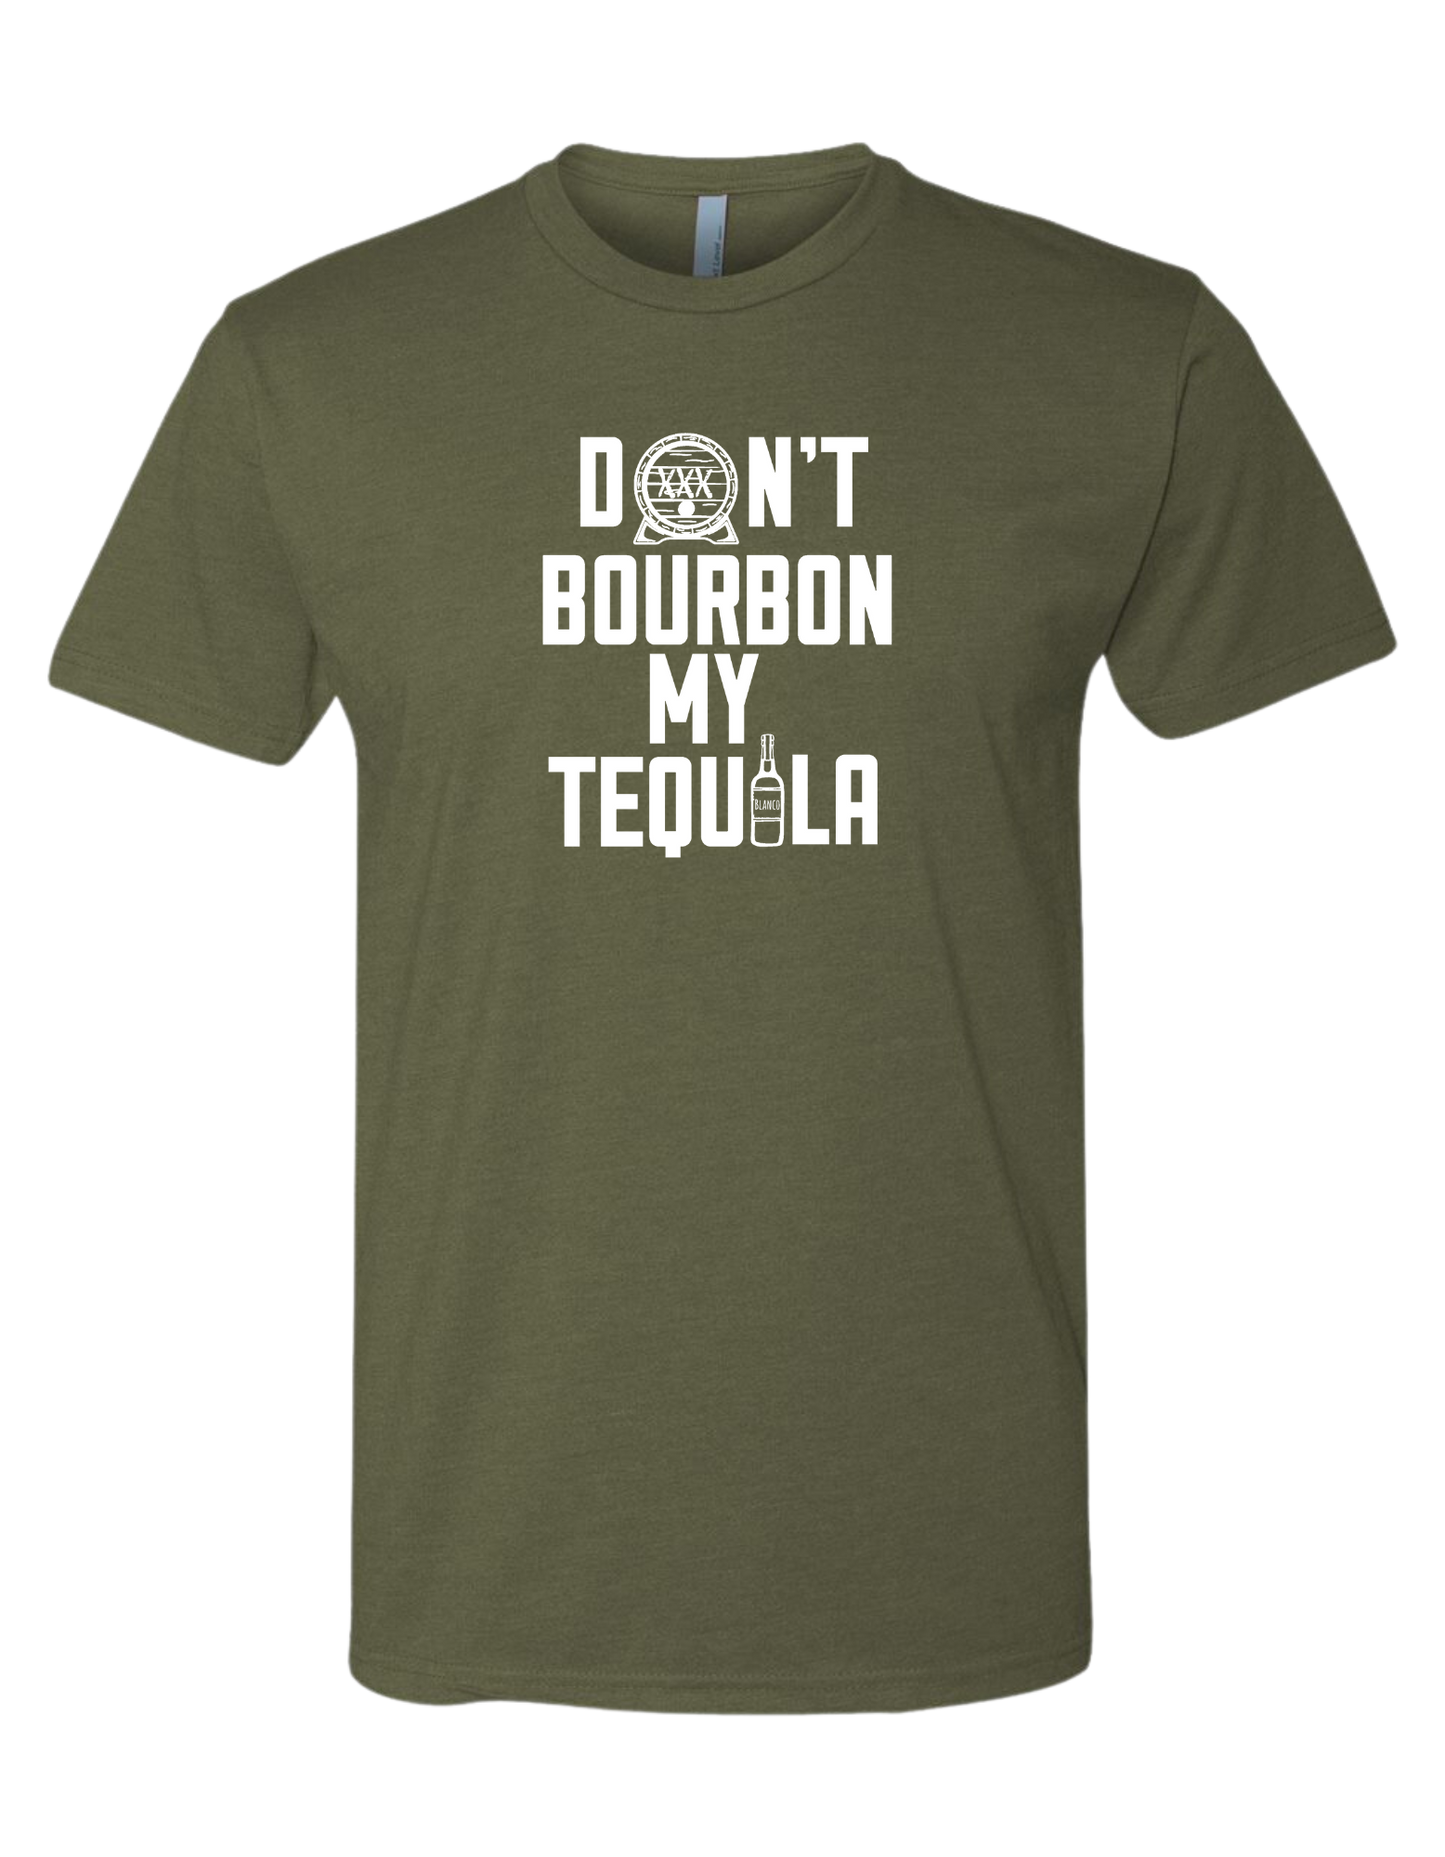 Don't Bourbon My Tequila! T-shirt